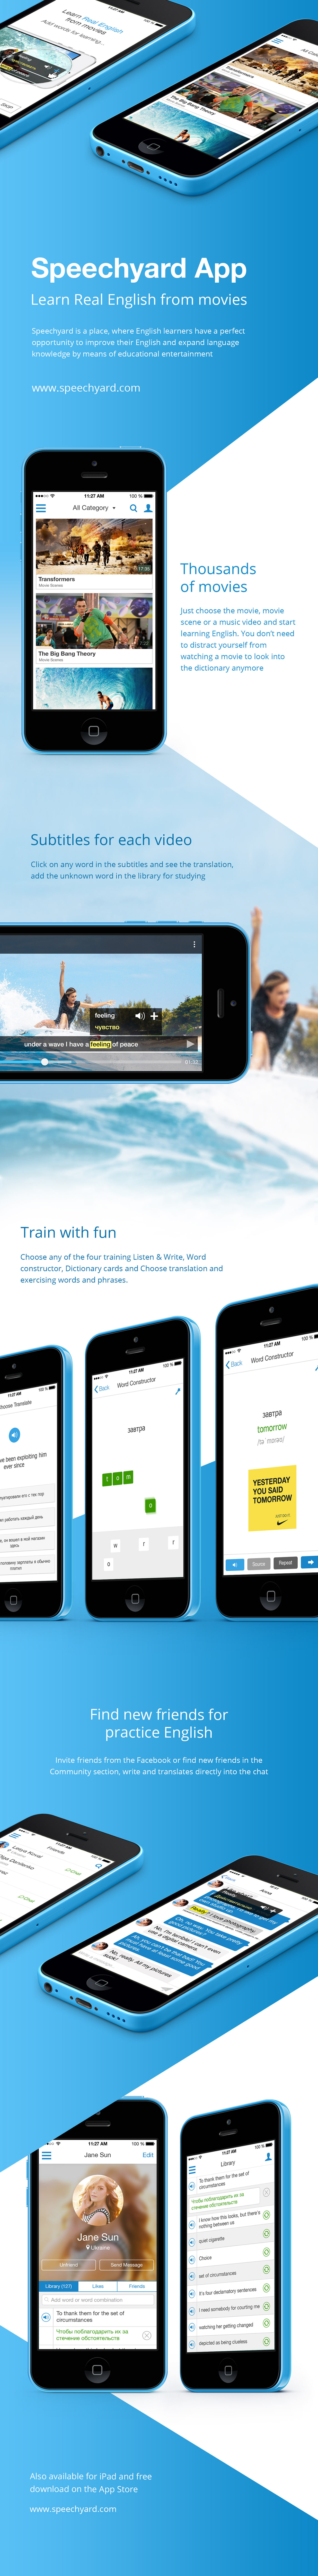 iphone app ios Speechyard Learn English Education learning study